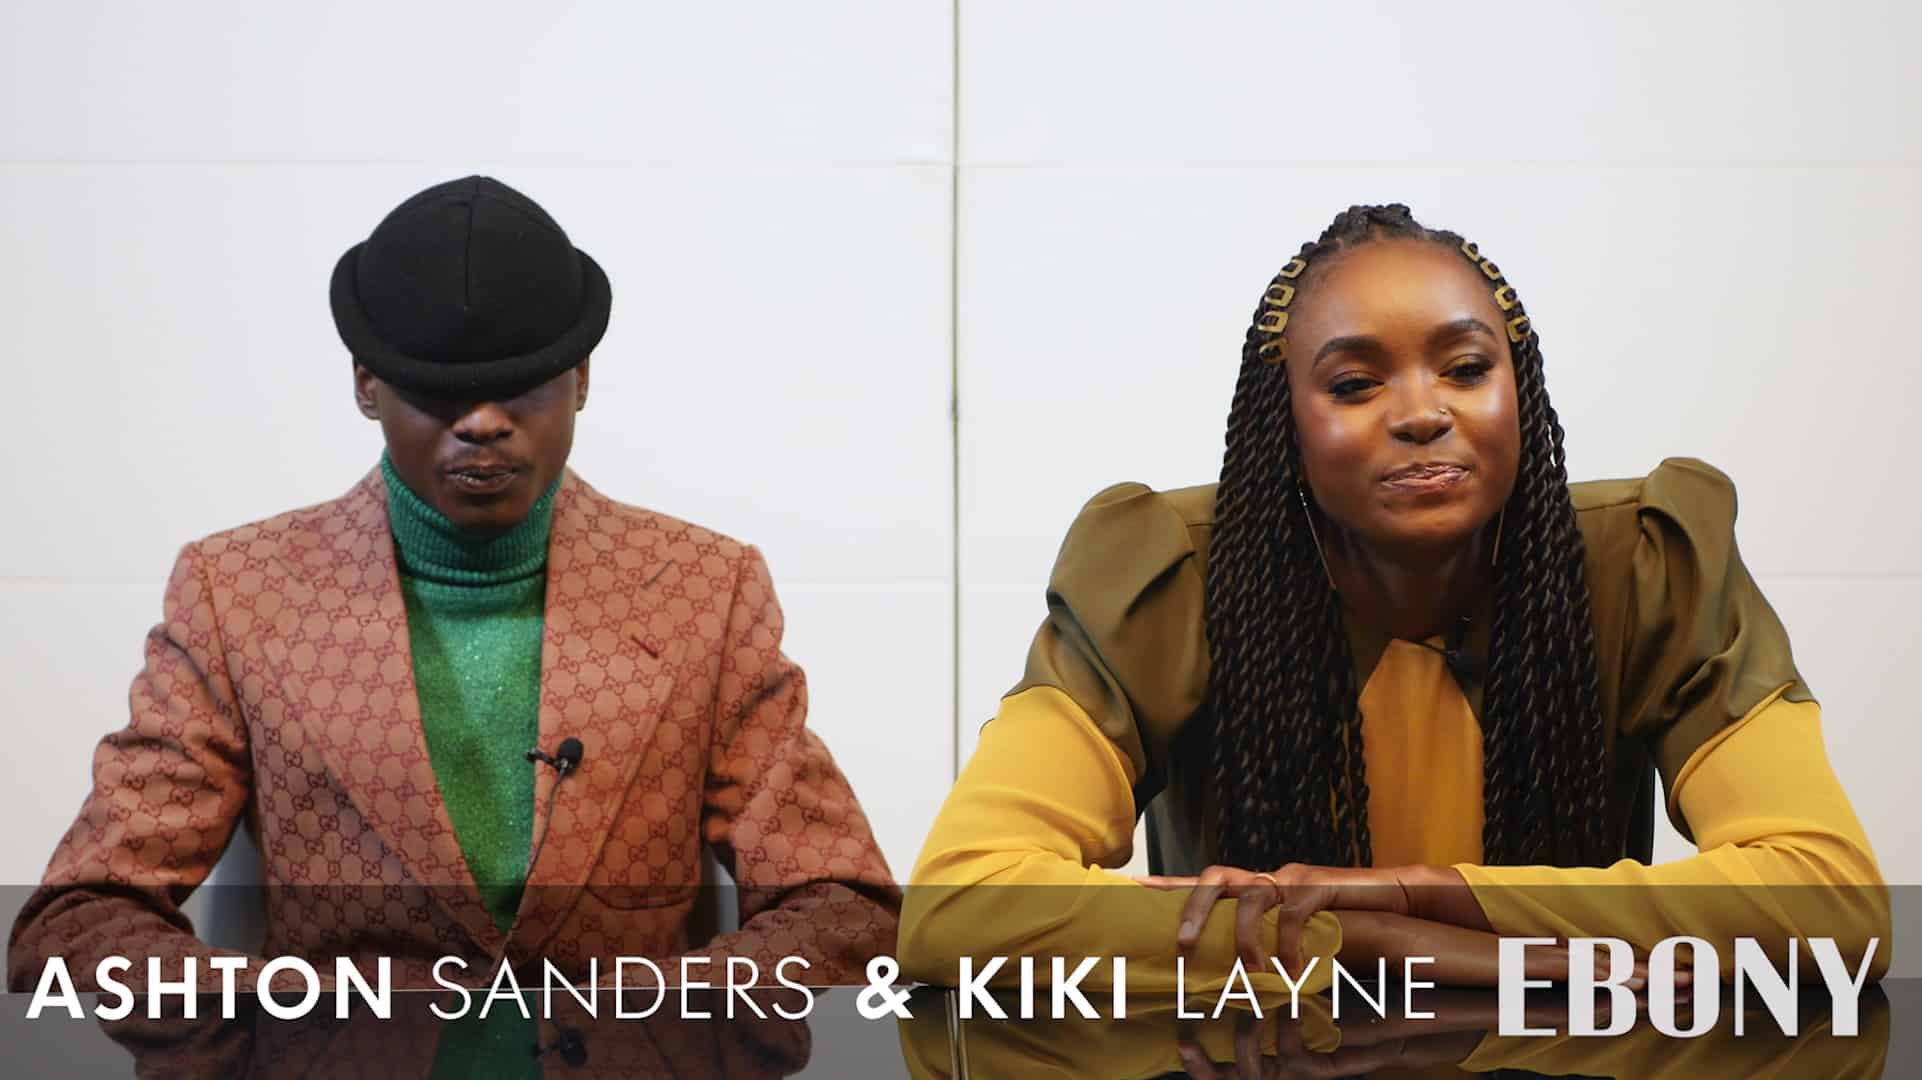 Ashton Sanders & KiKi Layne Talk Updating Richard Wright Classic, 'Native Son'